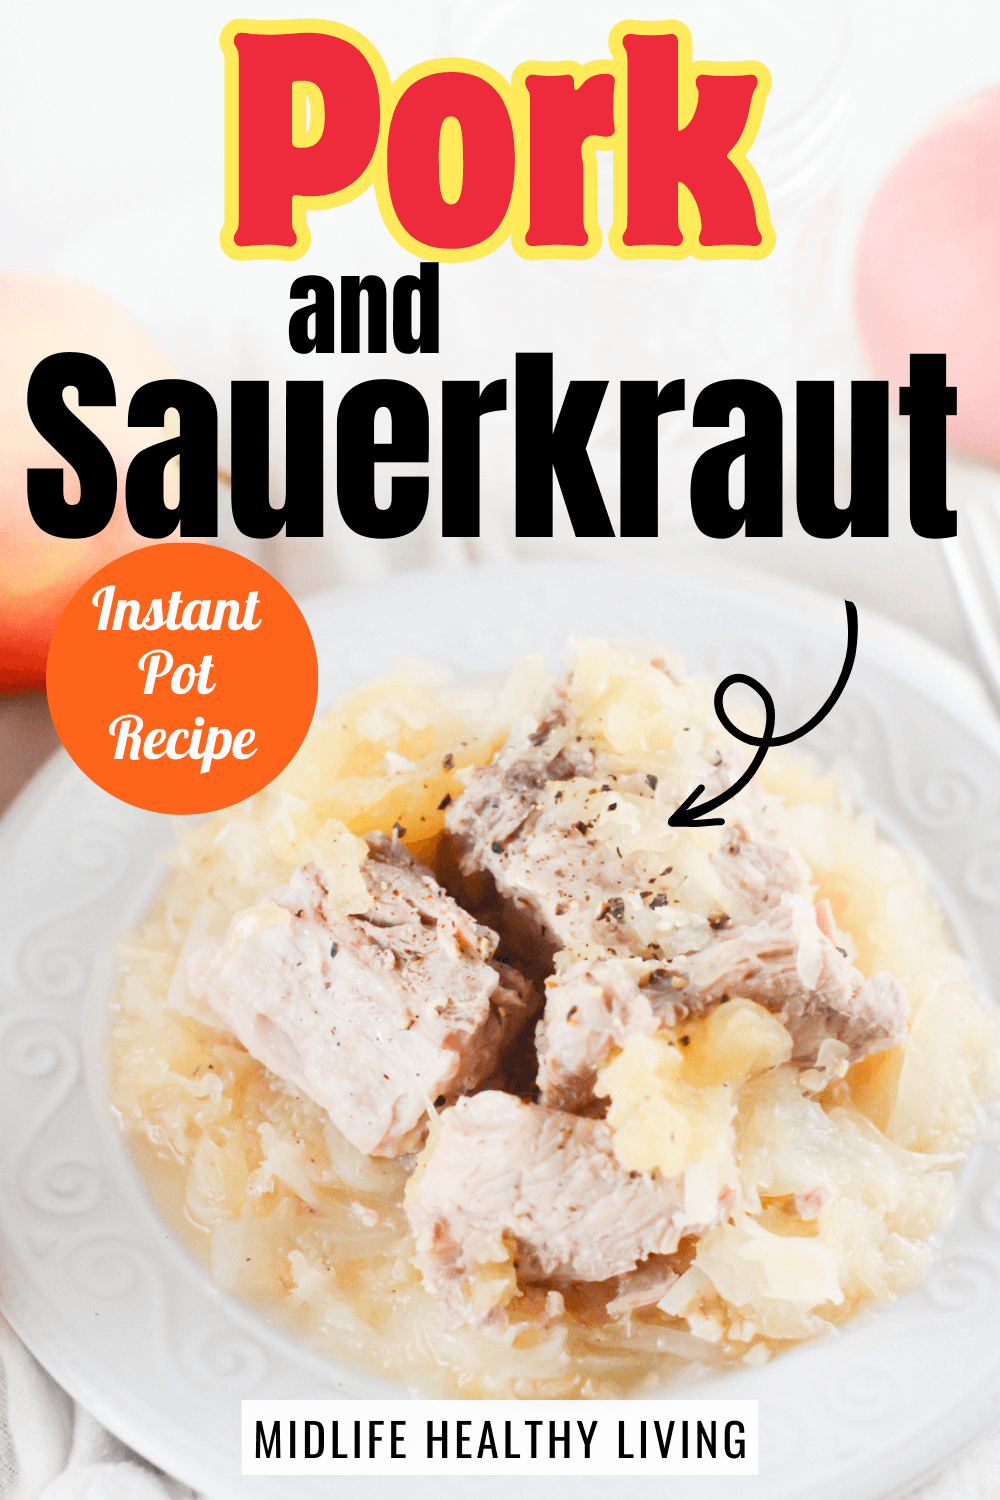 pork and Sauerkraut recipe made in instant pot